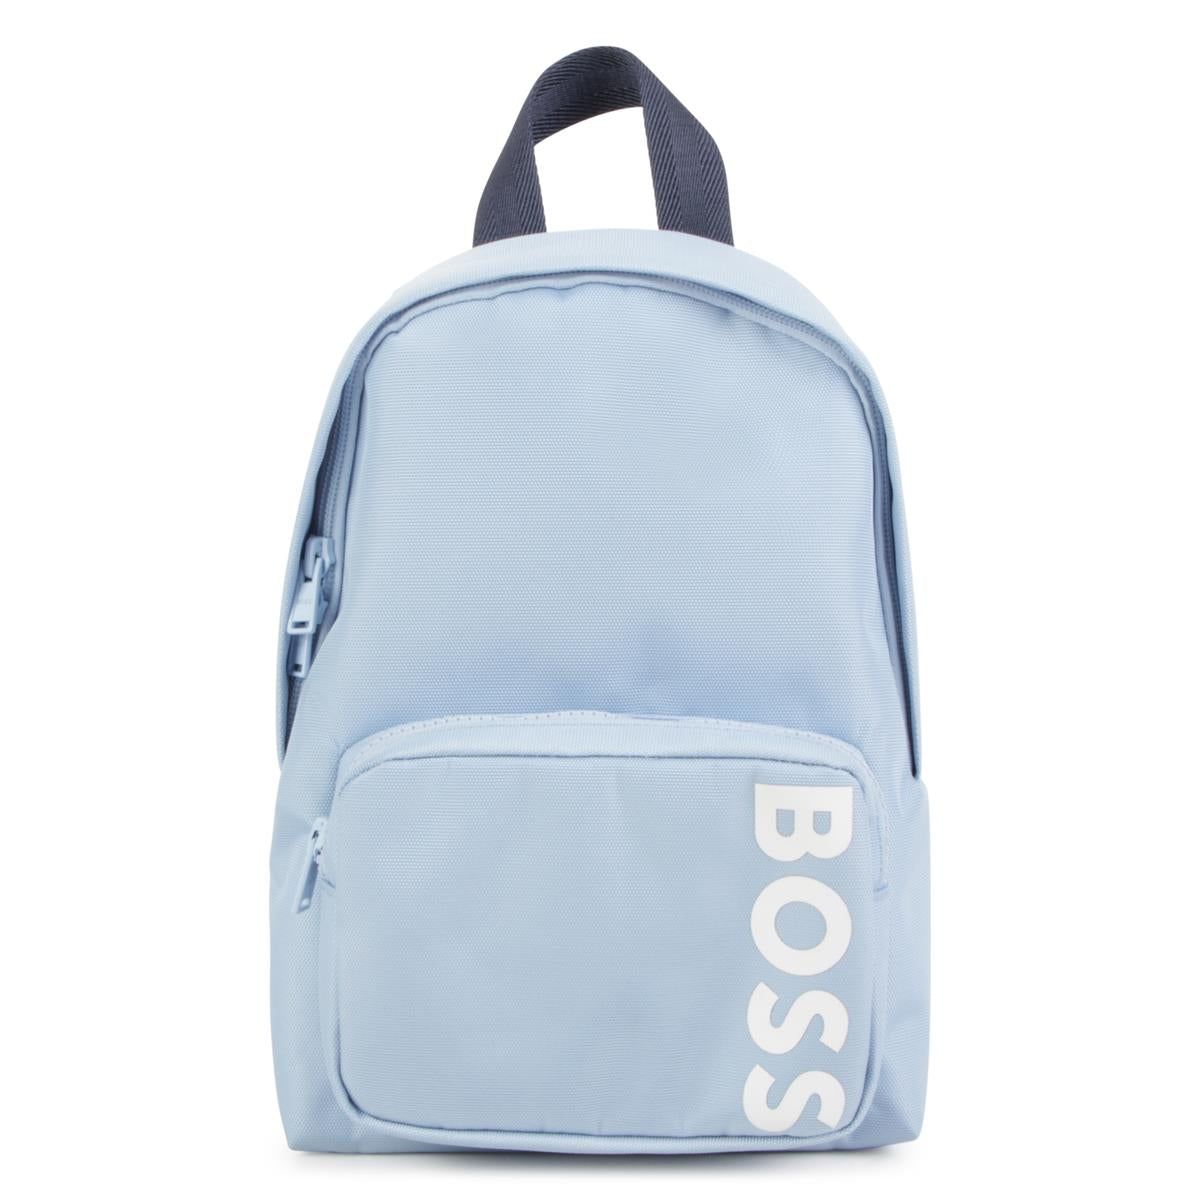 Boys Light Blue Backpack(27x20.5x8.5cm)